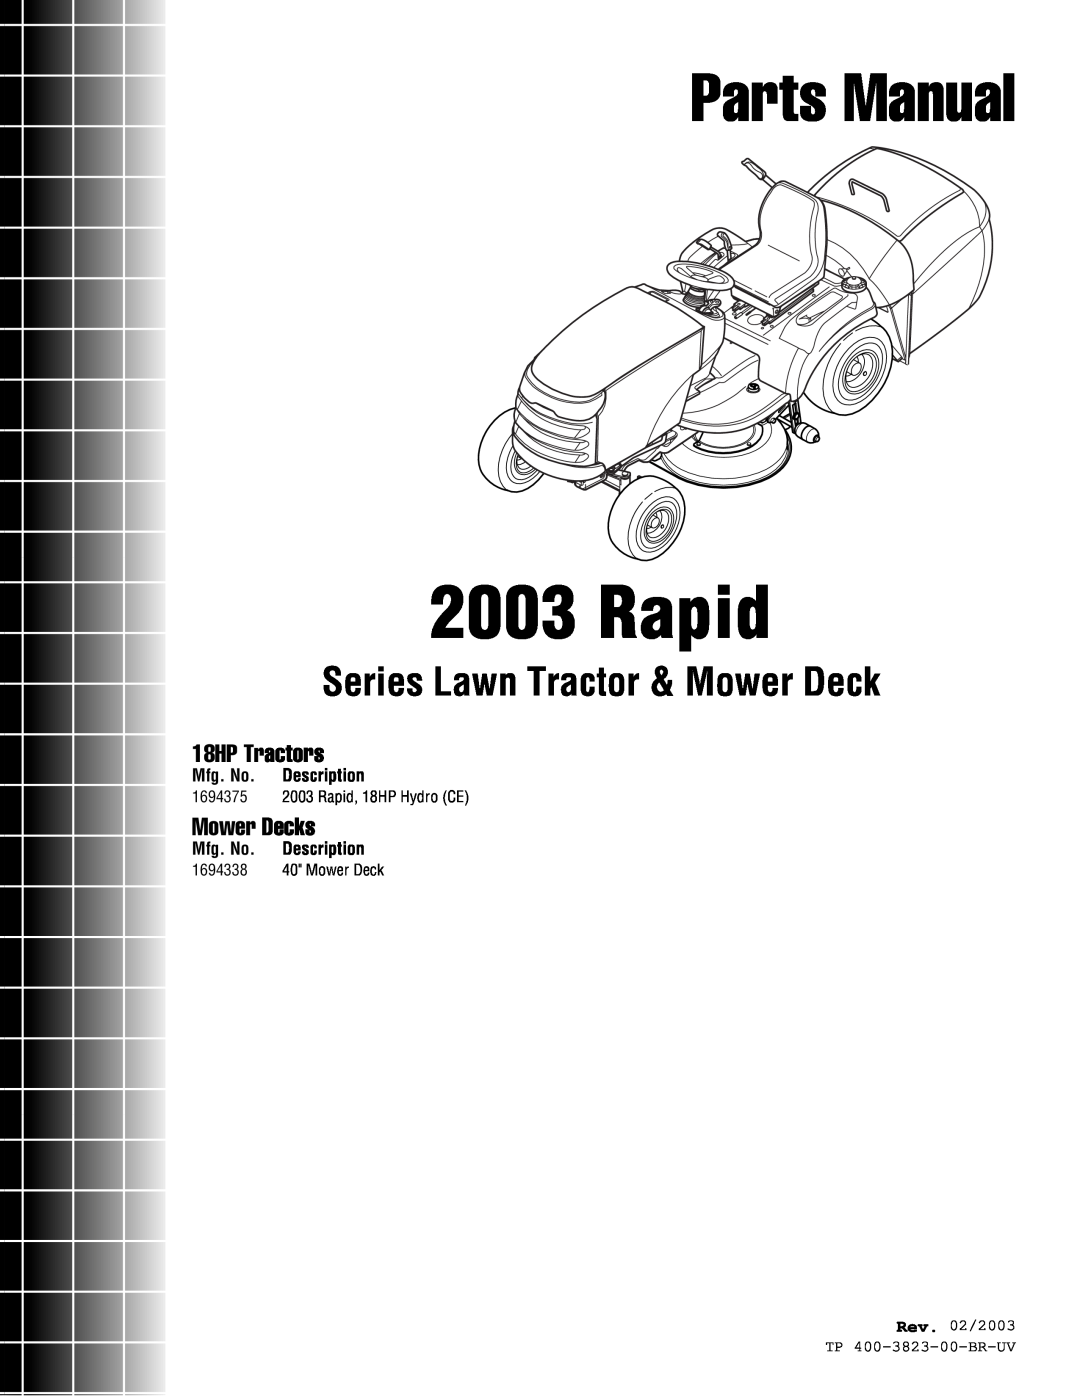 Simplicity 2003 Rapid manual Mfg. No. Description, Rev. 02/2003 TP 400-3823-00-BR-UV, Parts Manual, 18HP Tractors 